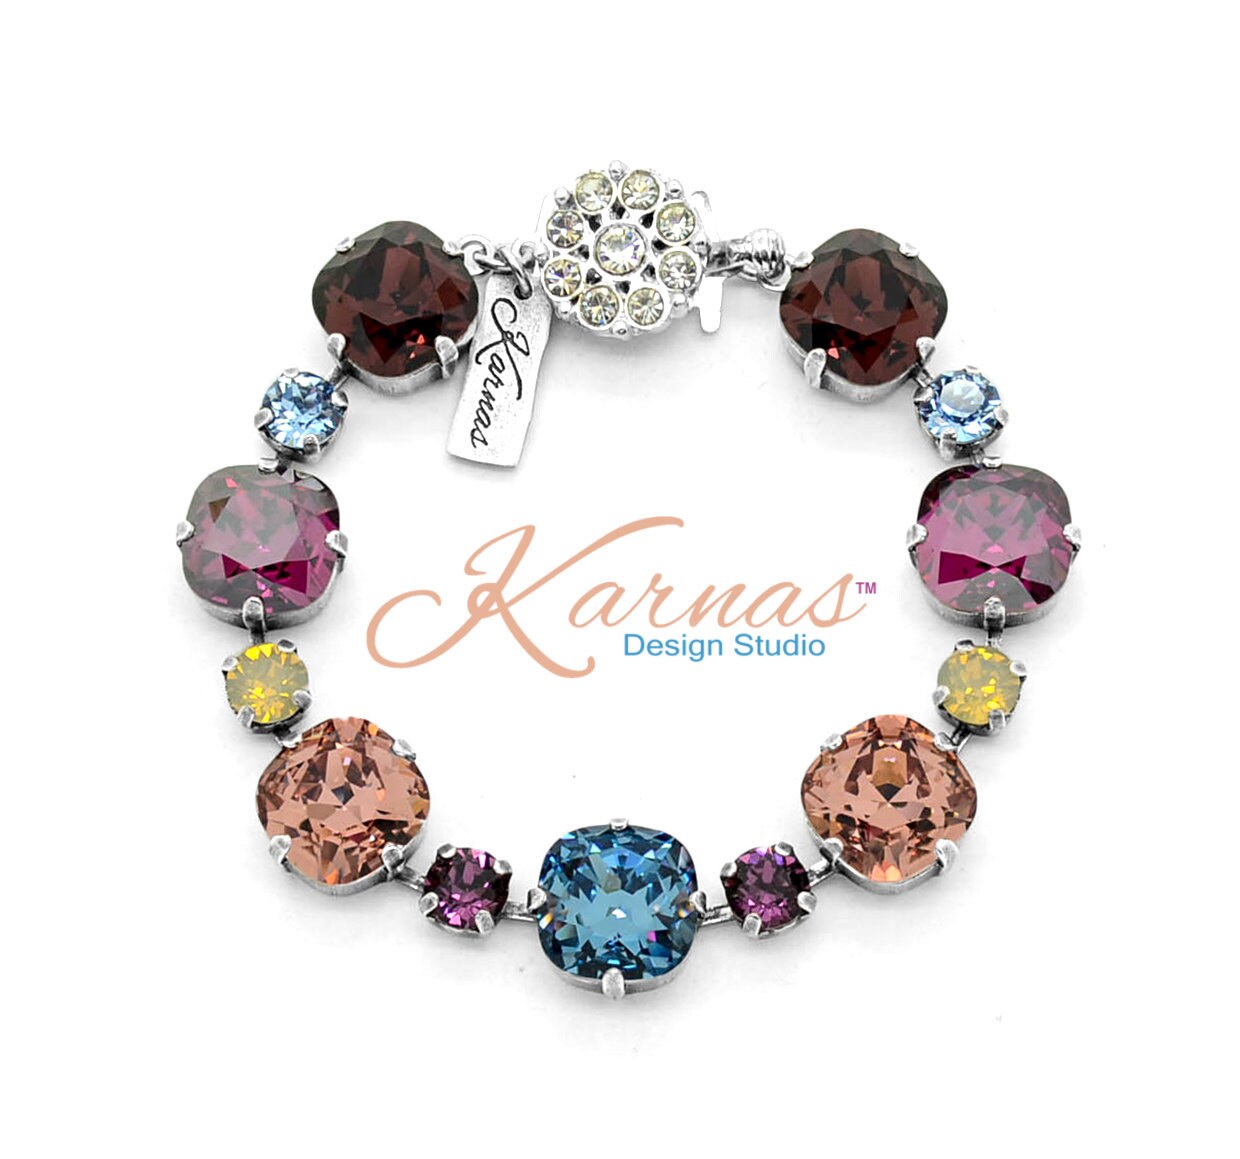 Warm & Toasty 12mm/6mm Cushion Cut Bracelet K.d.s. Premium Crystal Choose Your Finish Karnas Design Studio Free Shipping